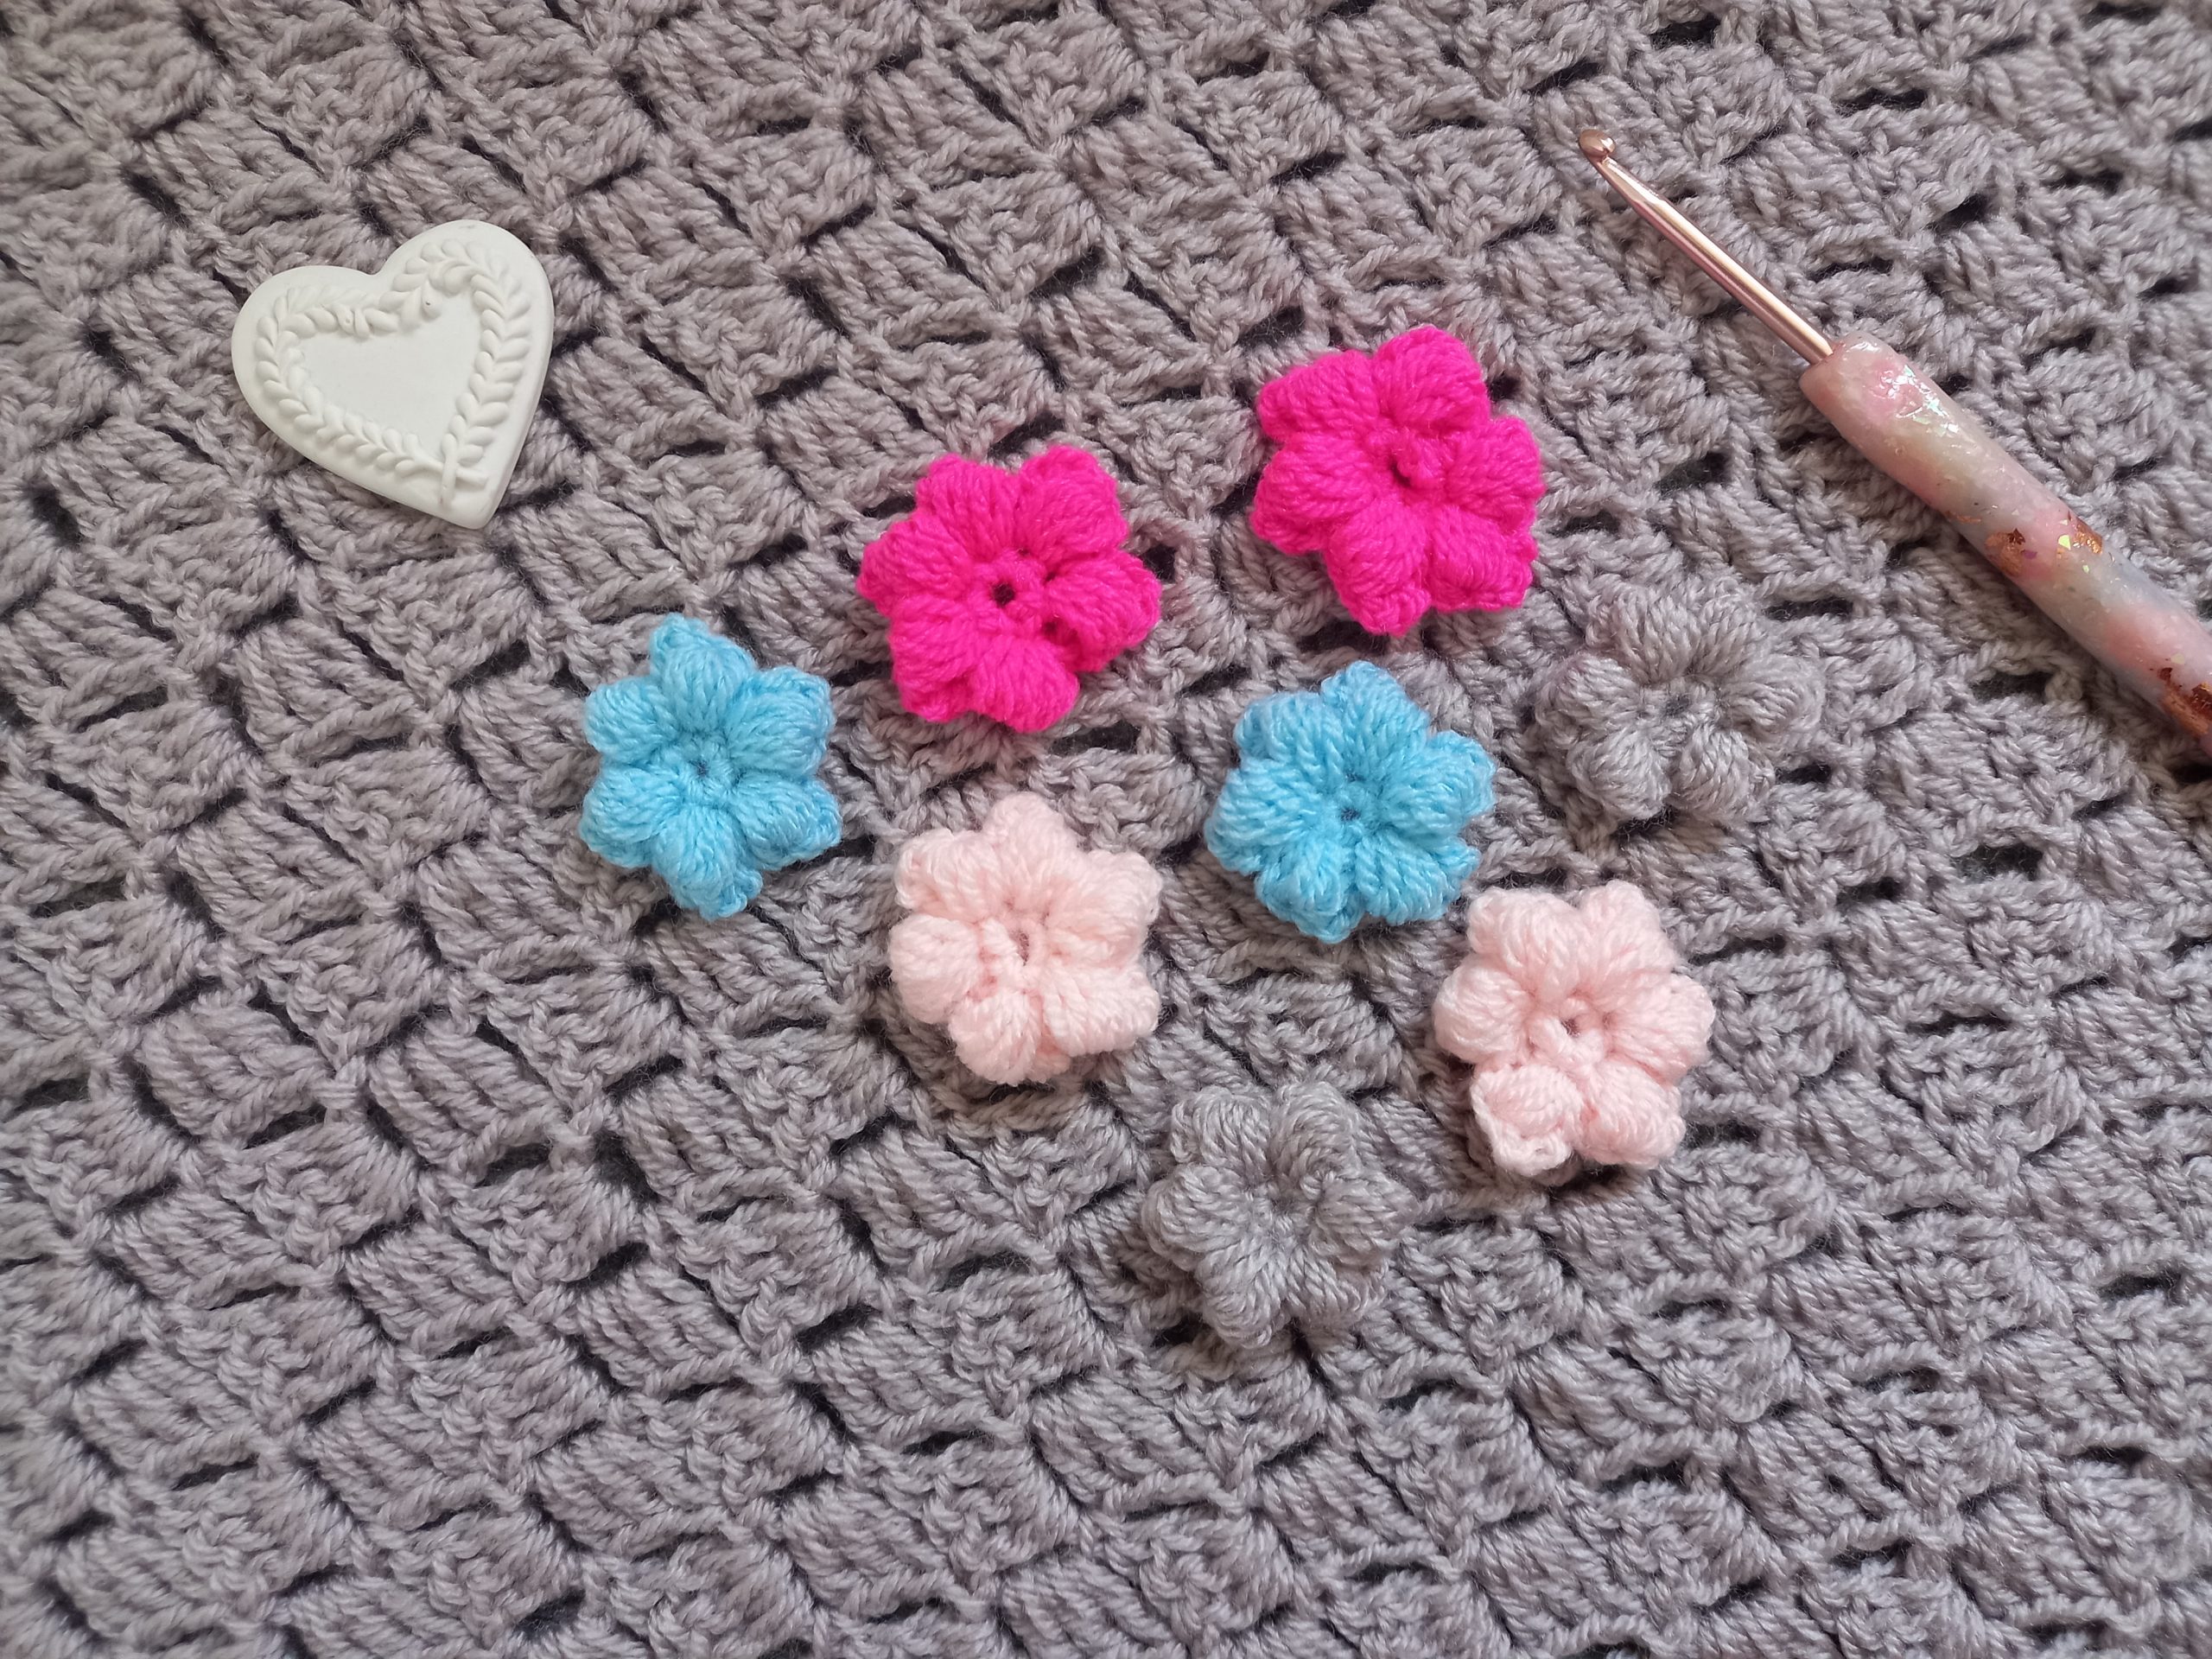 Set 3/6/9 Crochet Shades of Blue Roses Flower Applique